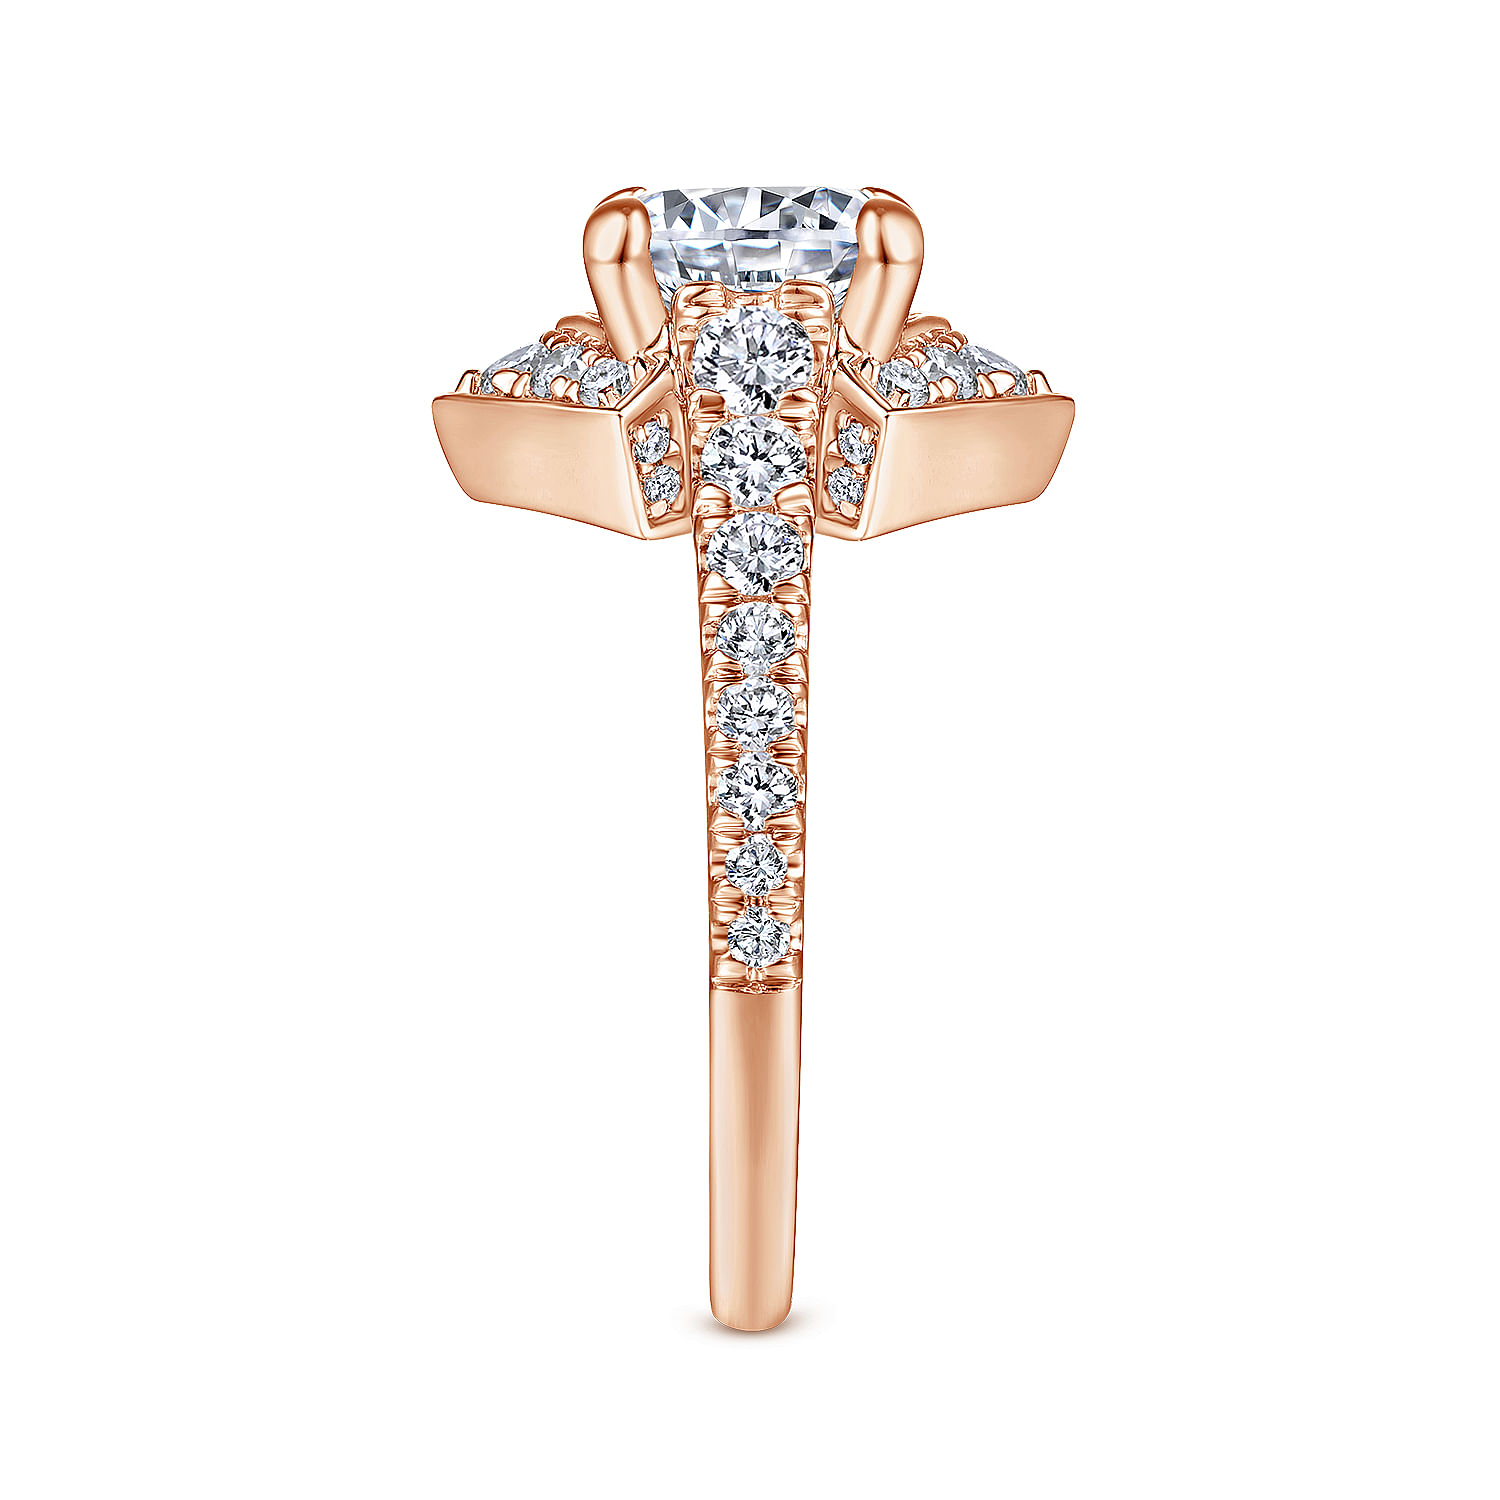 Art Deco 18K Rose Gold Round Halo Diamond Engagement Ring